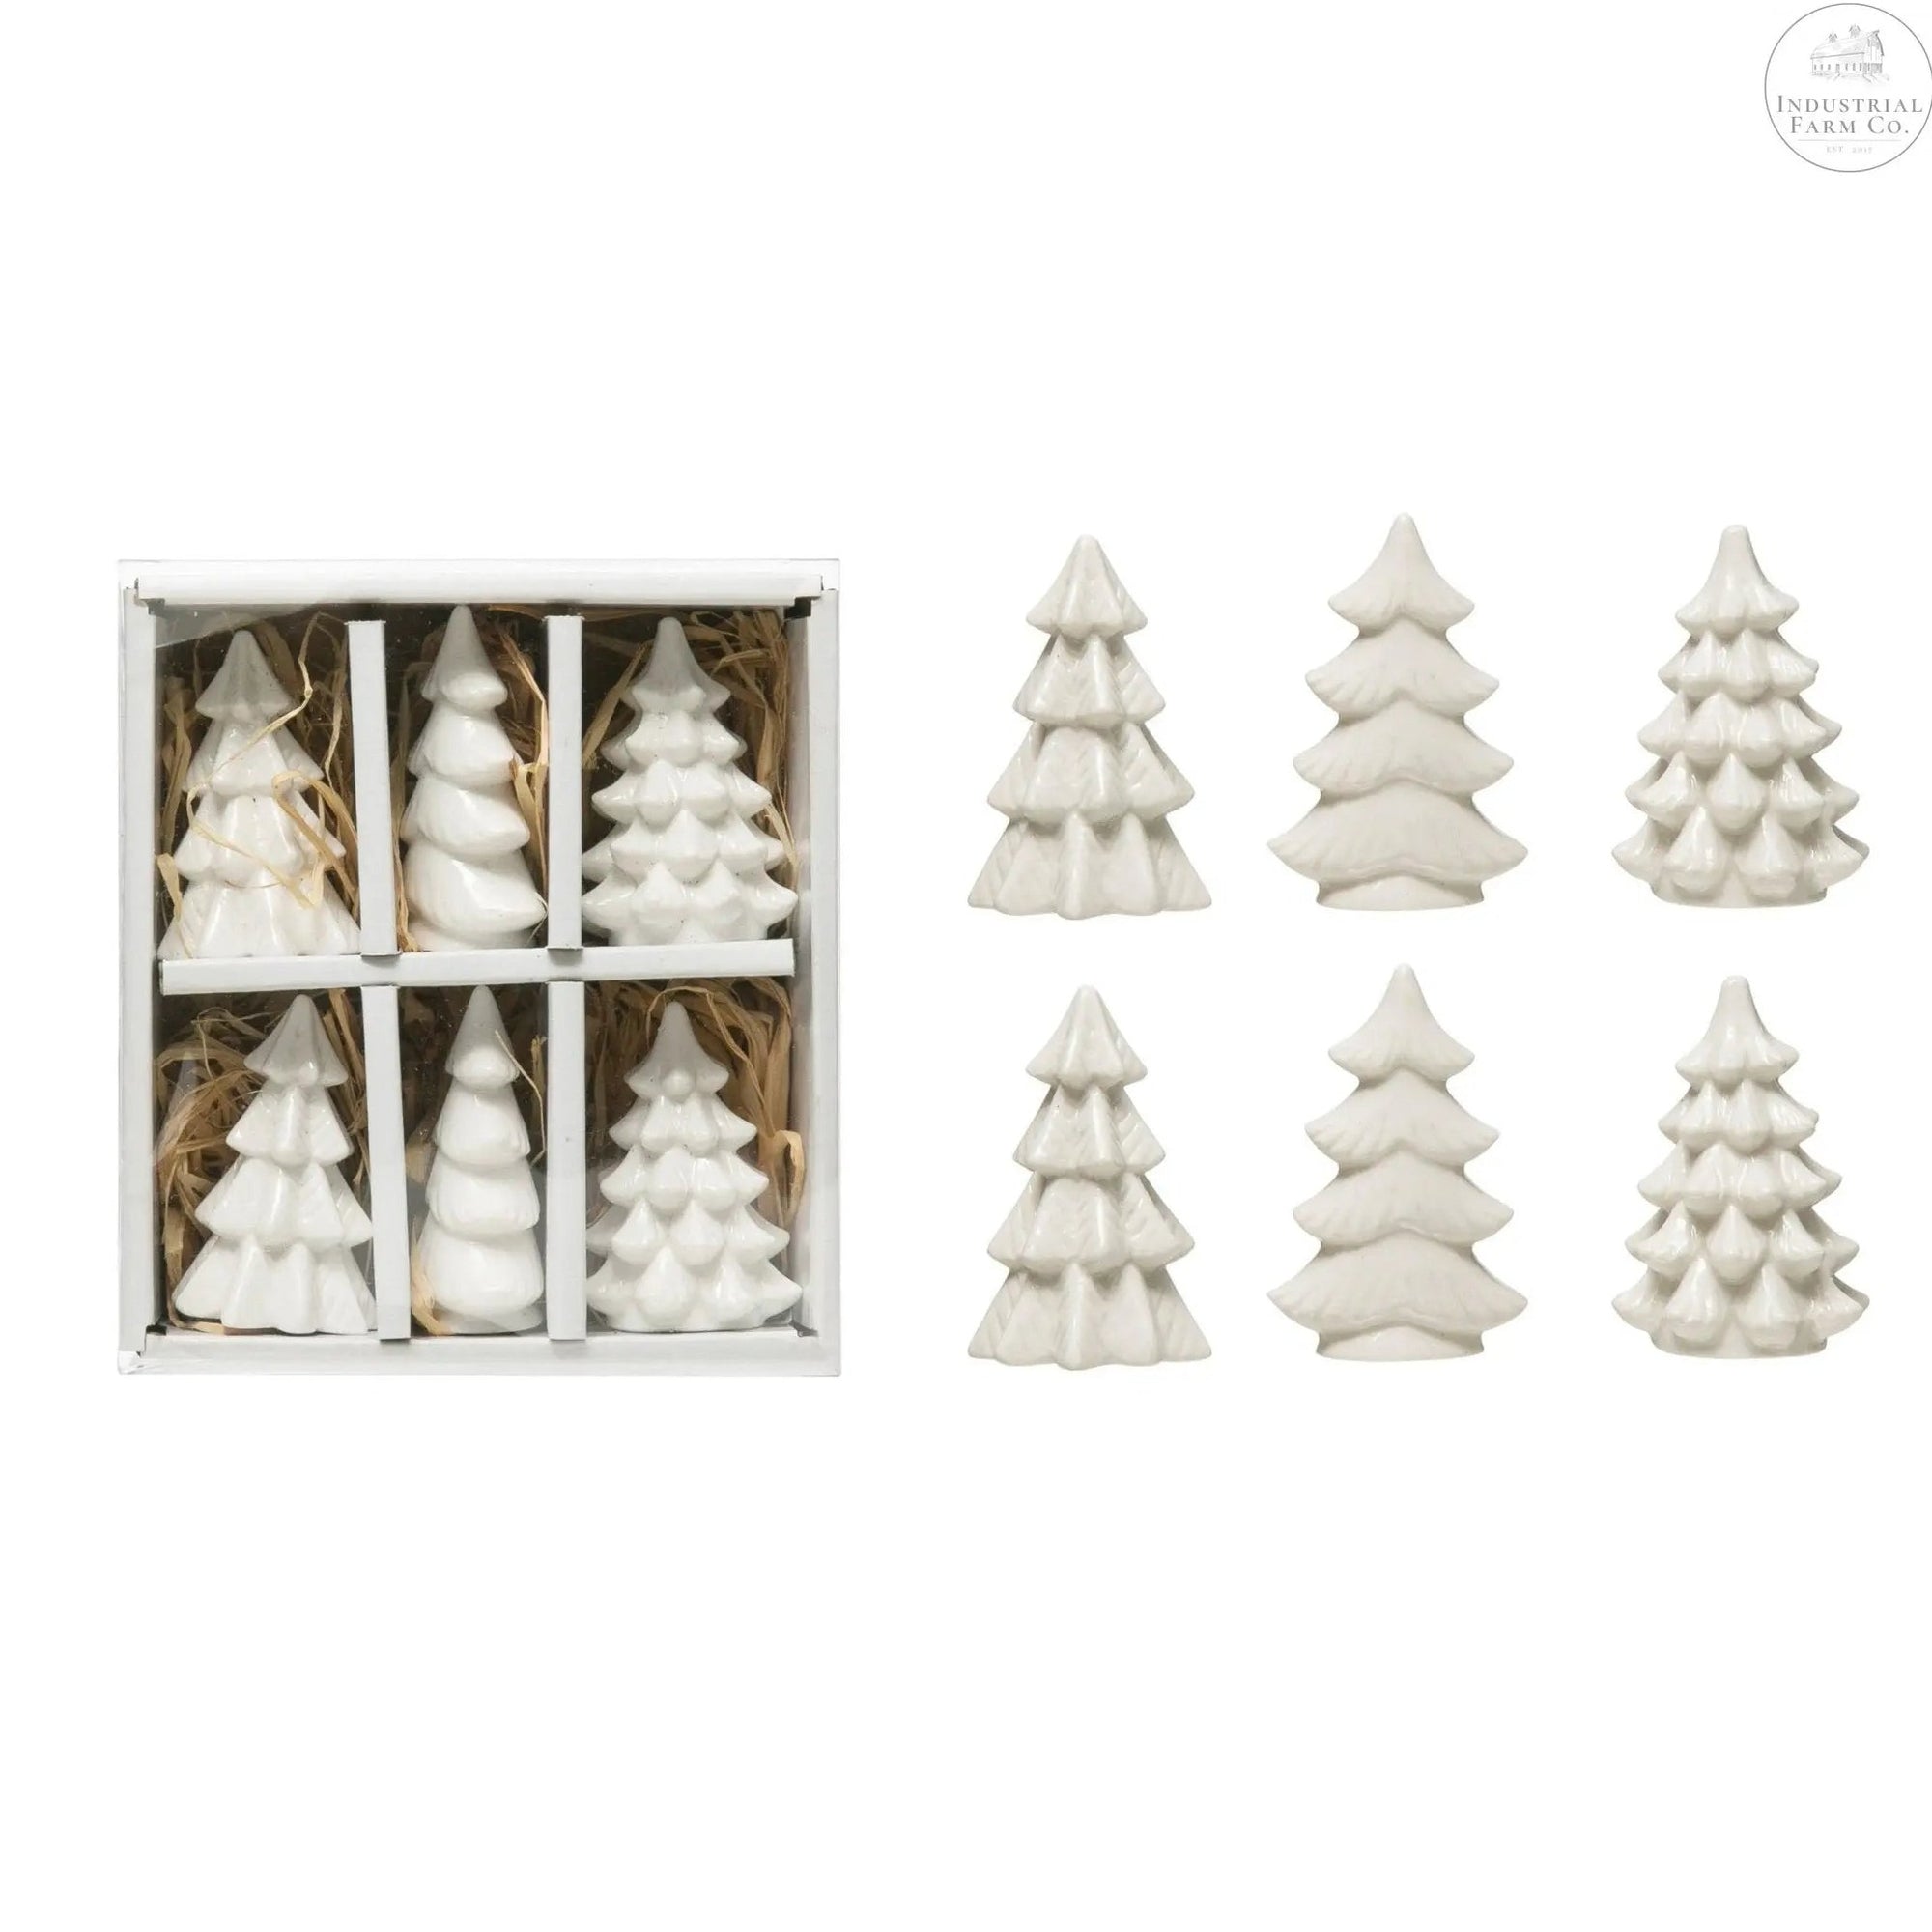 Winter Wonderland Stoneware Tree Set     | Industrial Farm Co